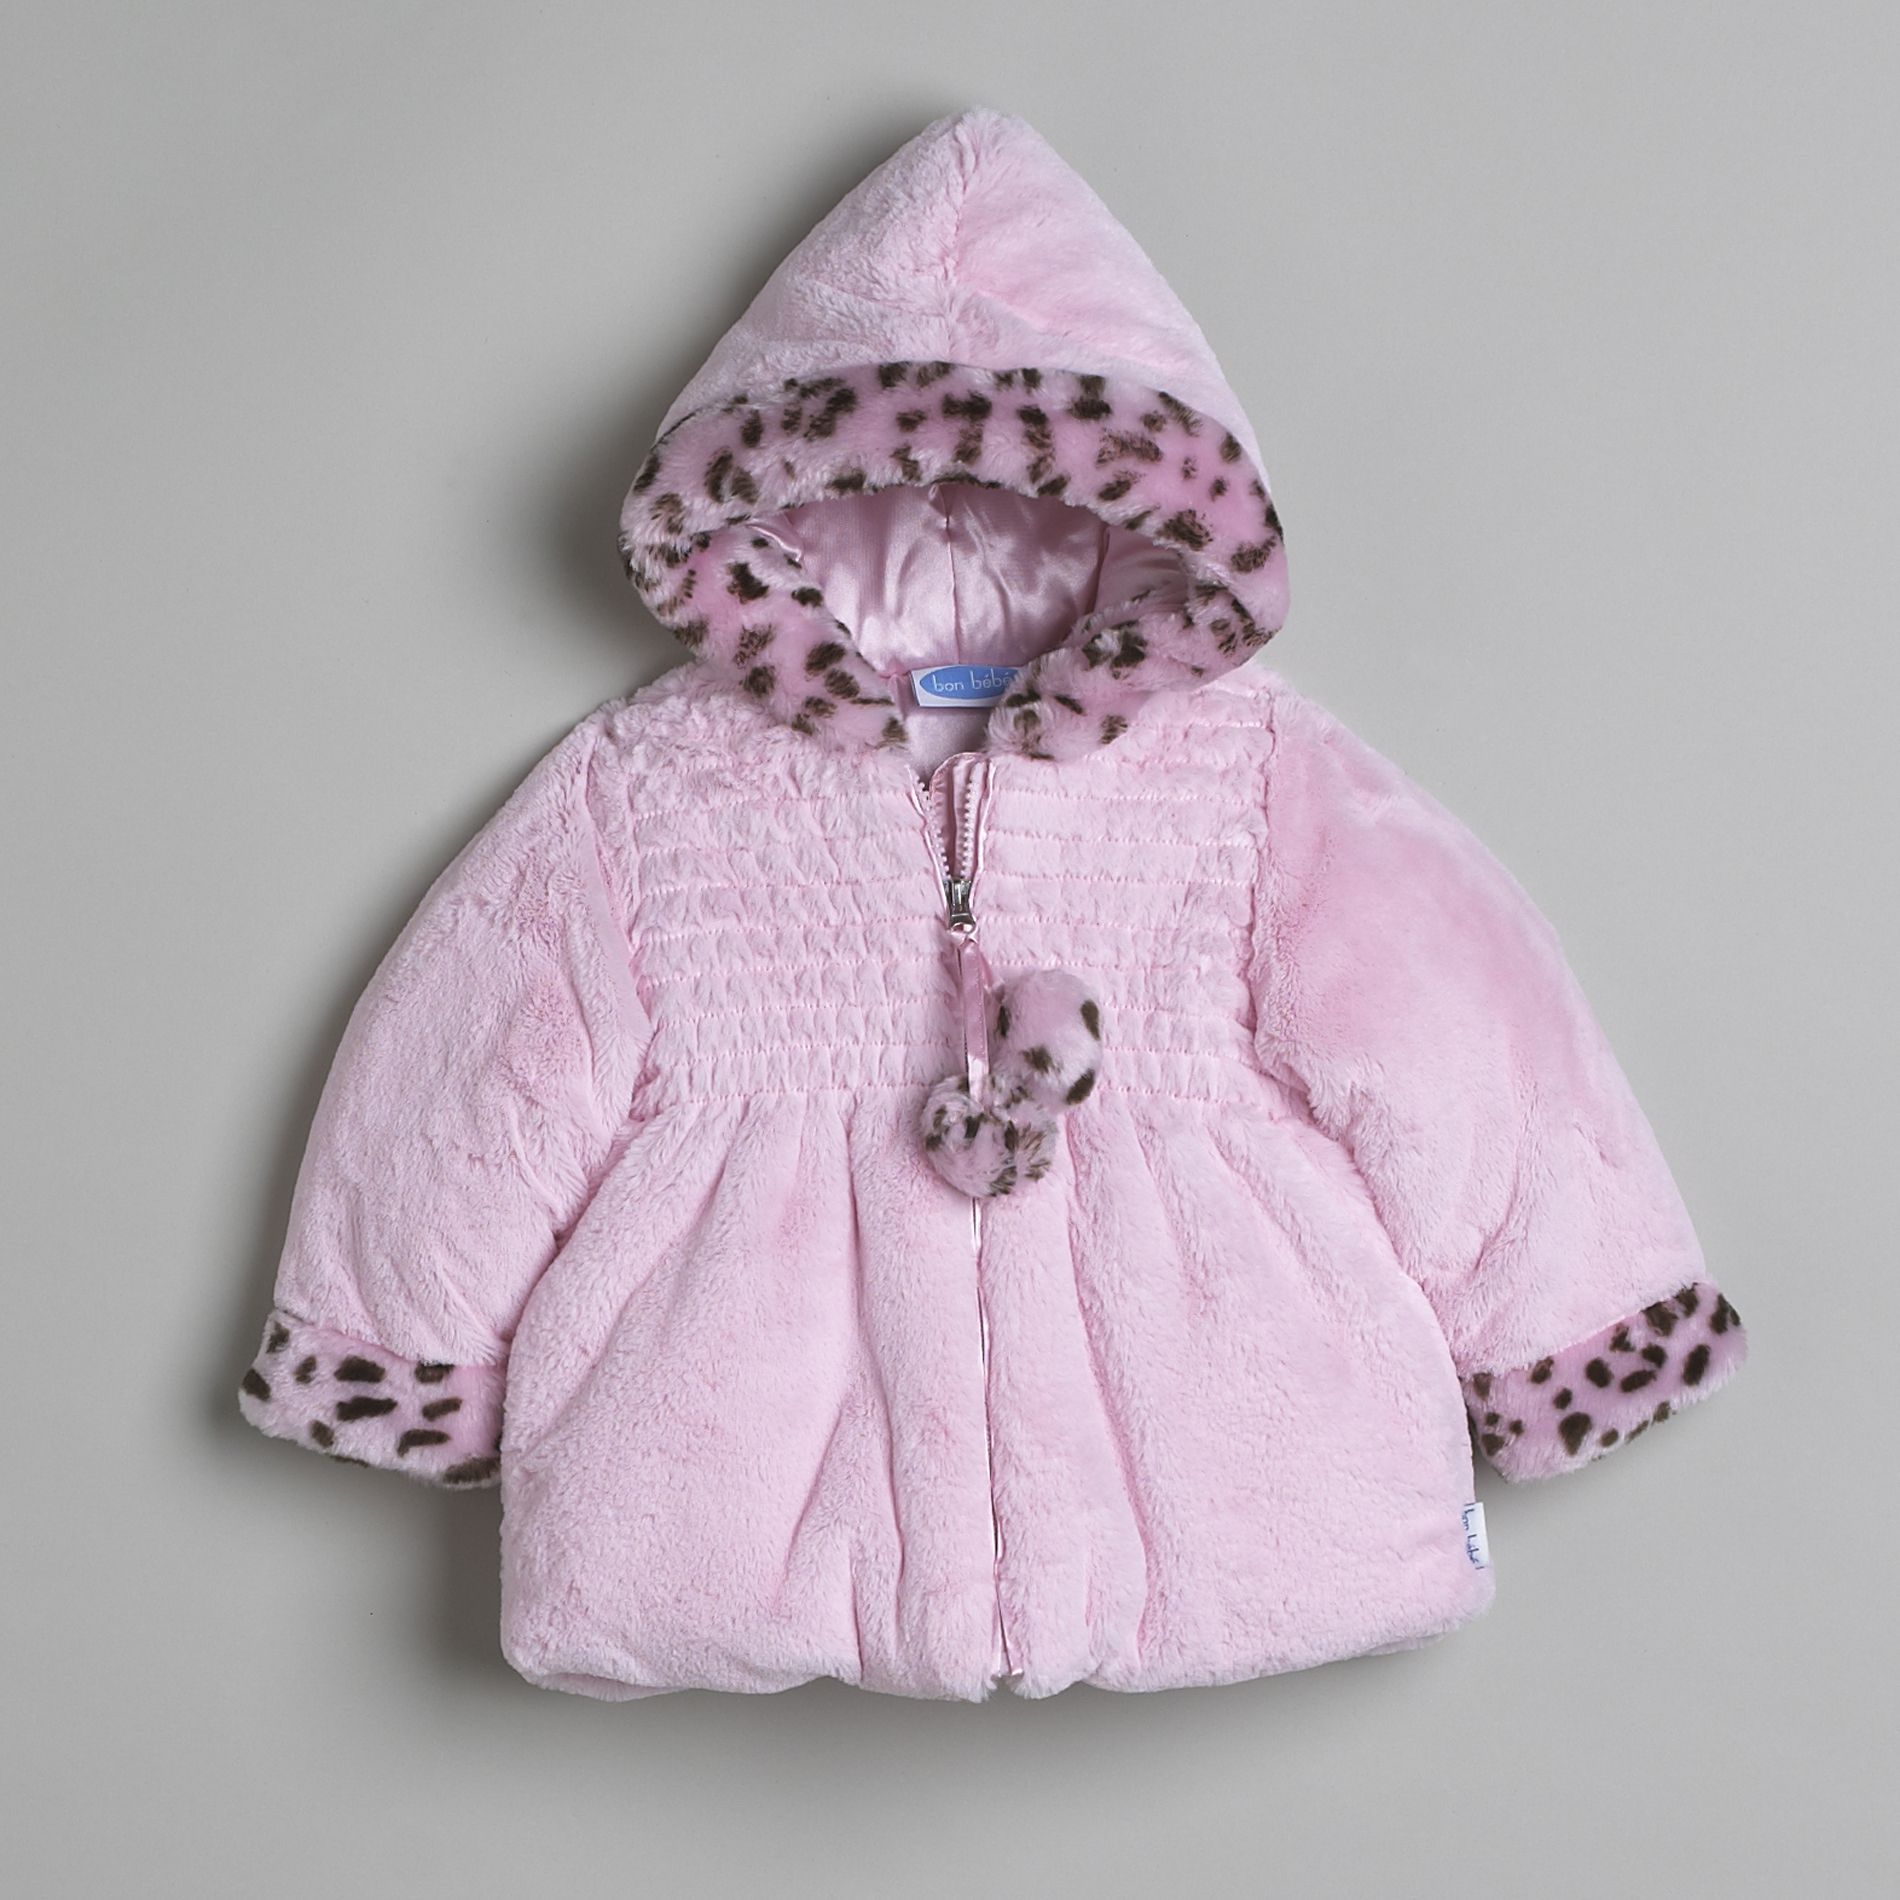 Bon Bebe Infant Girls' Winter Jacket Faux fur